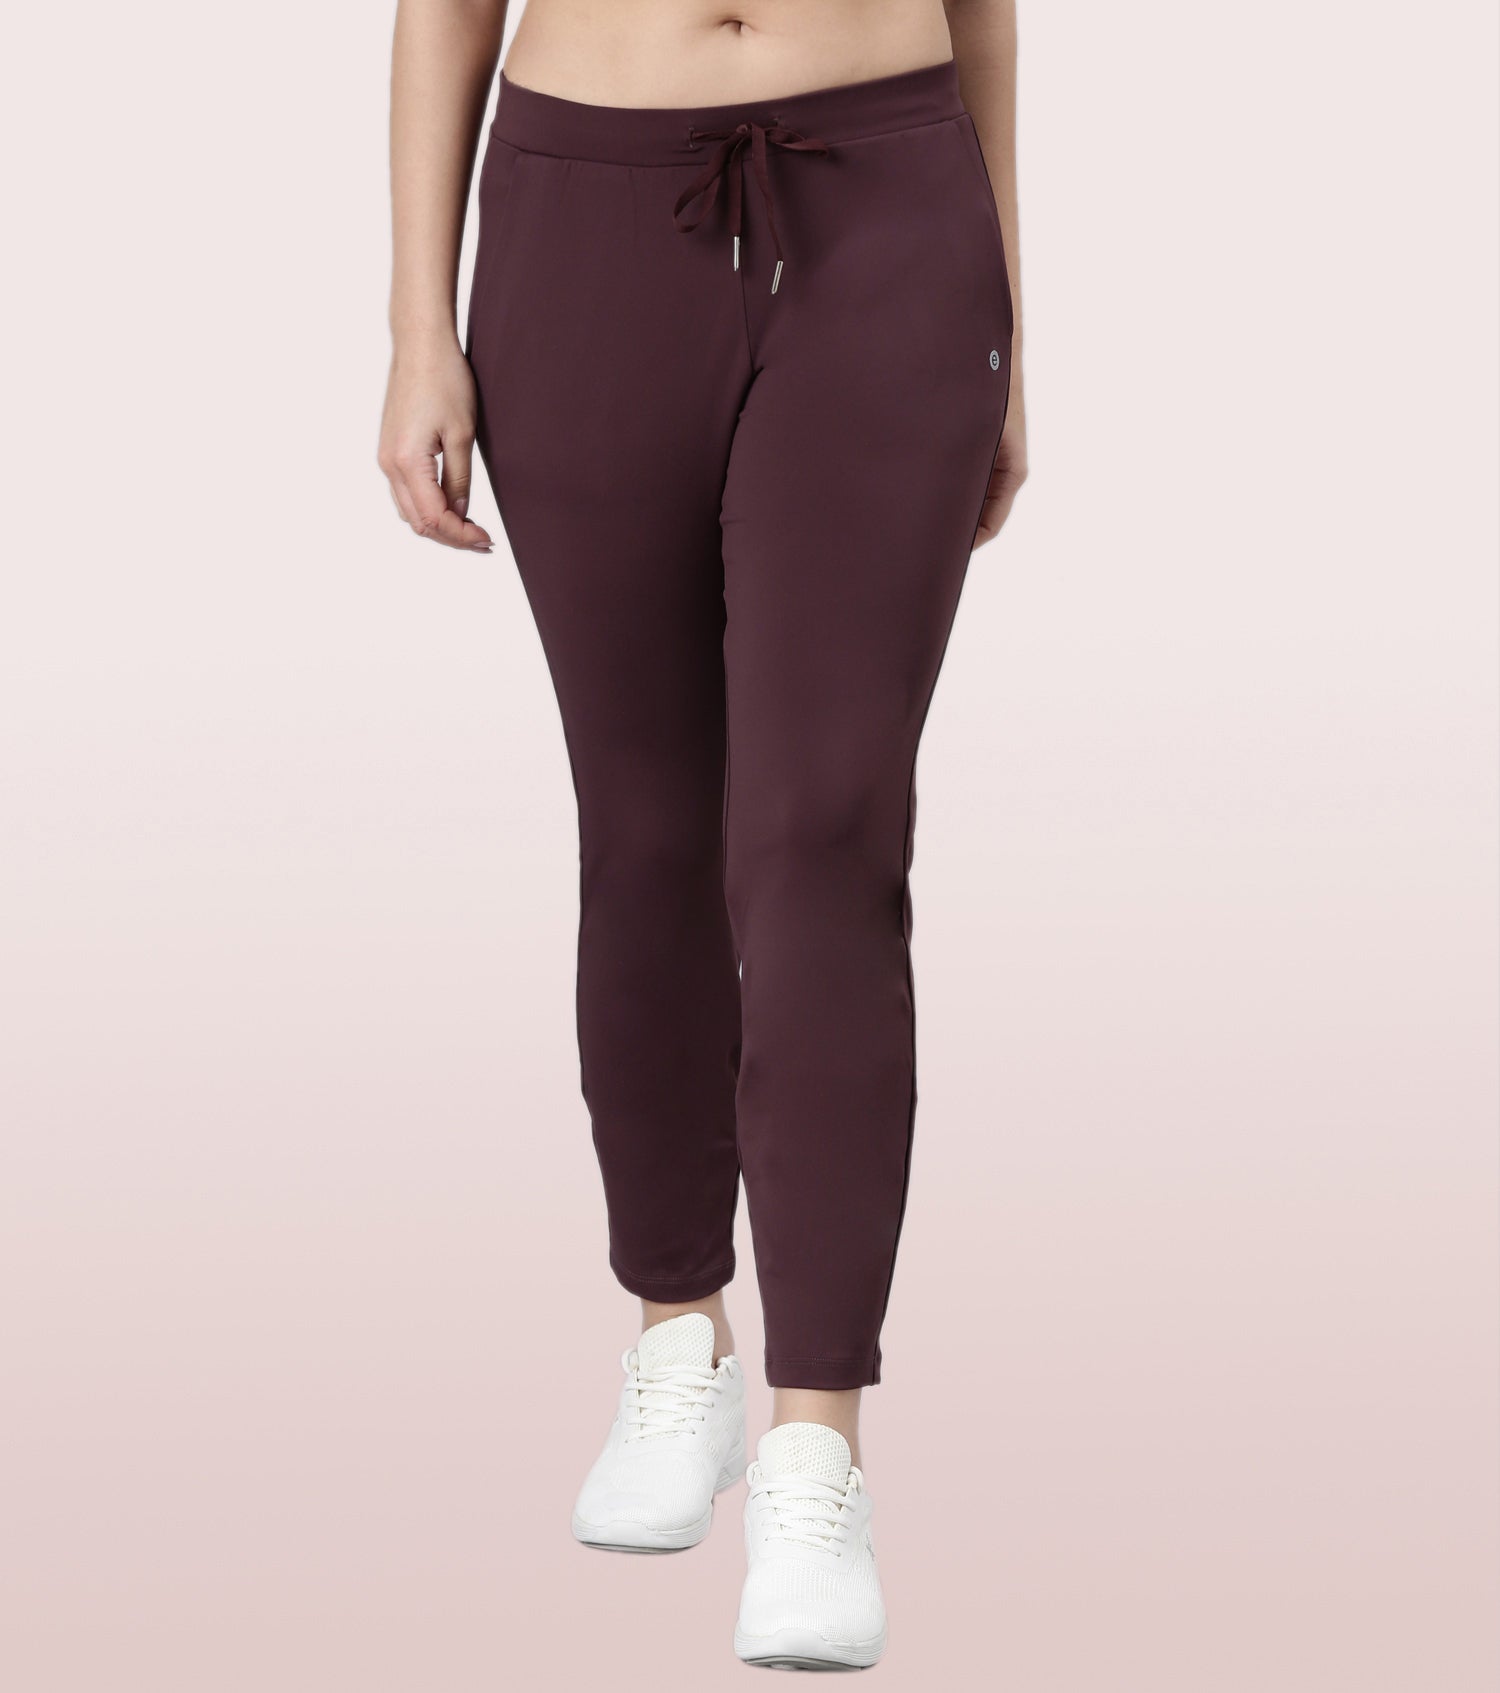 Travel Pant | Dry Fit Smart Active Pants | E068 - Choco Fudge / S